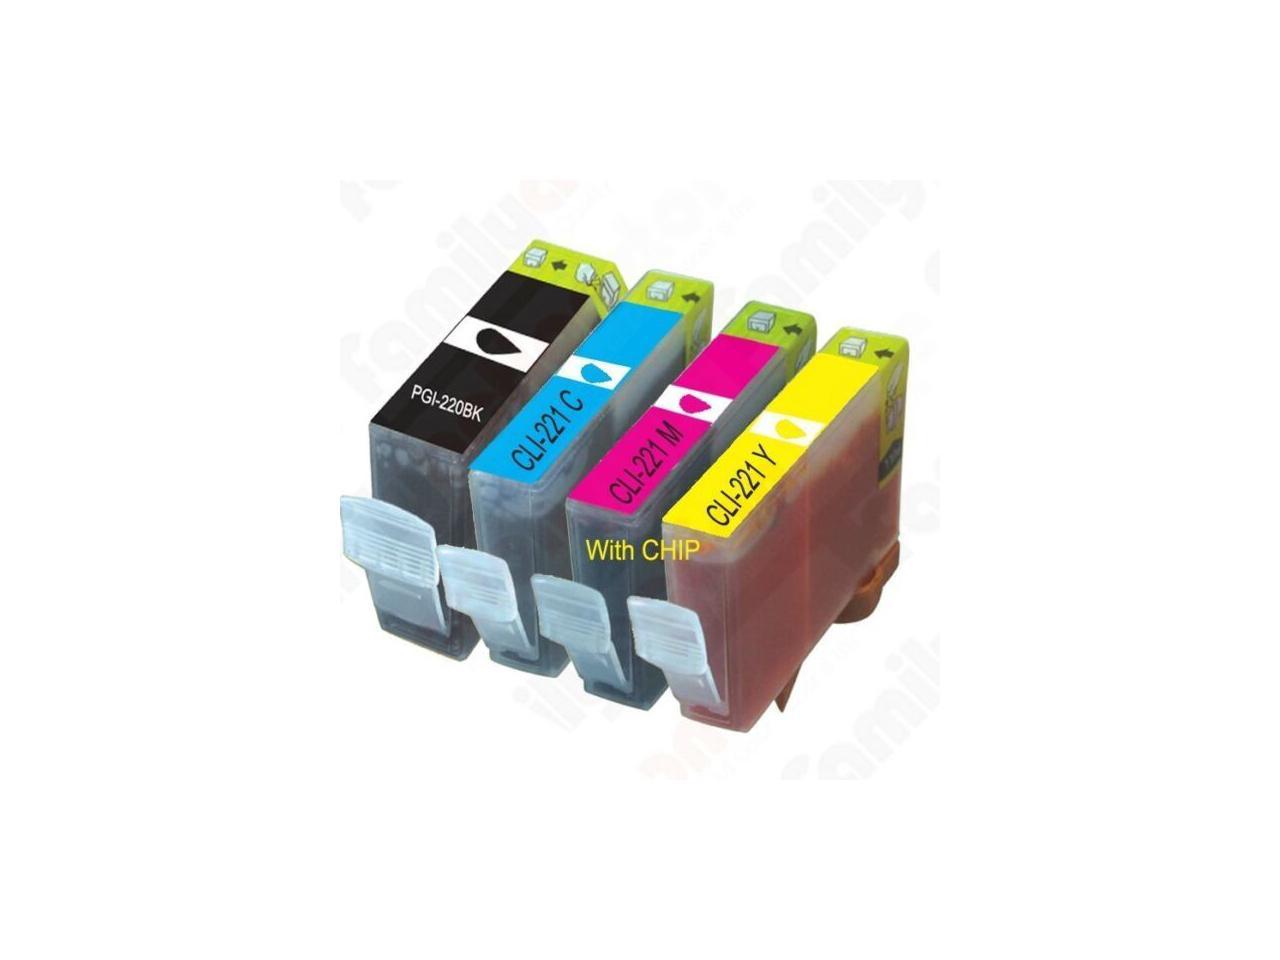 canon mx890 printer cartridges